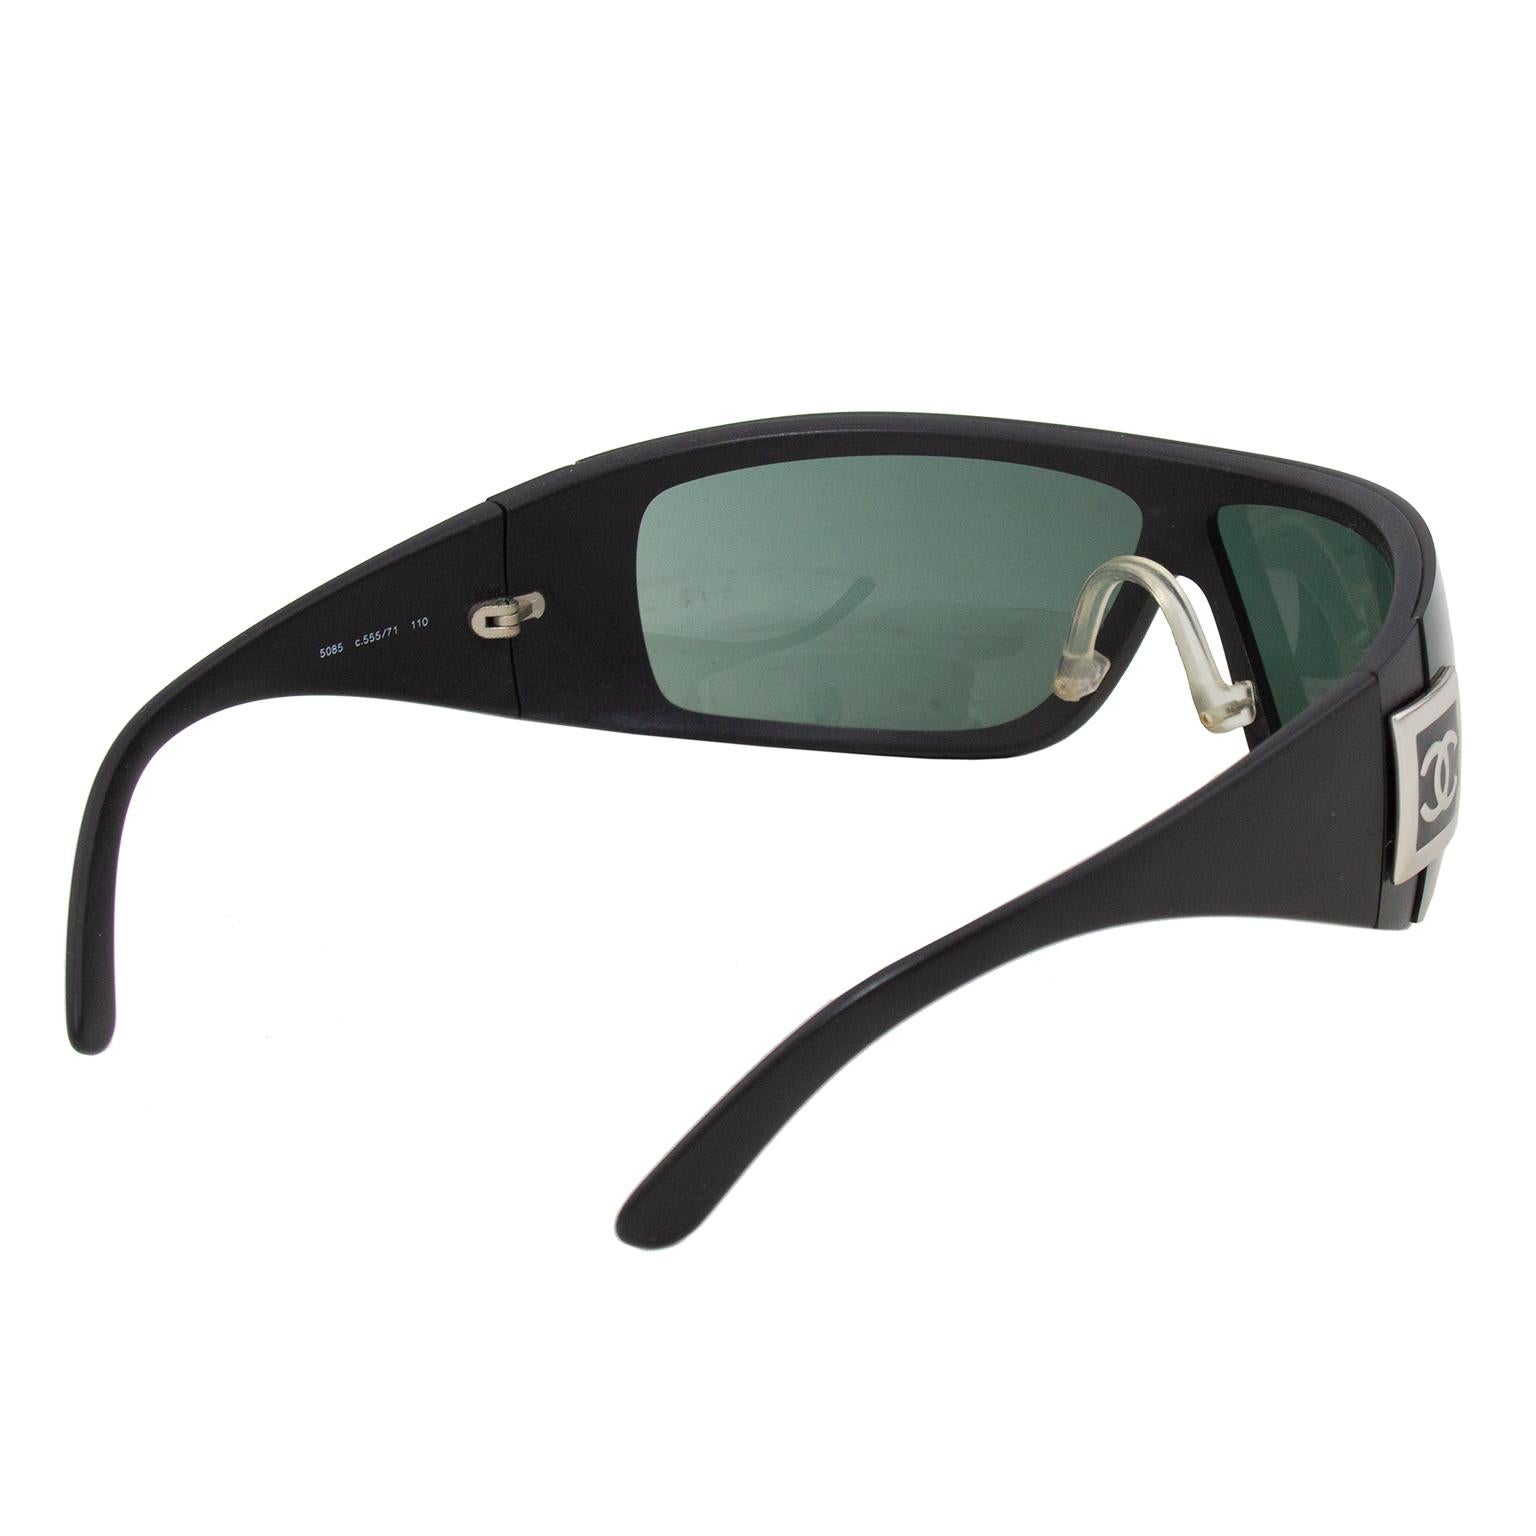 2000s black sunglasses